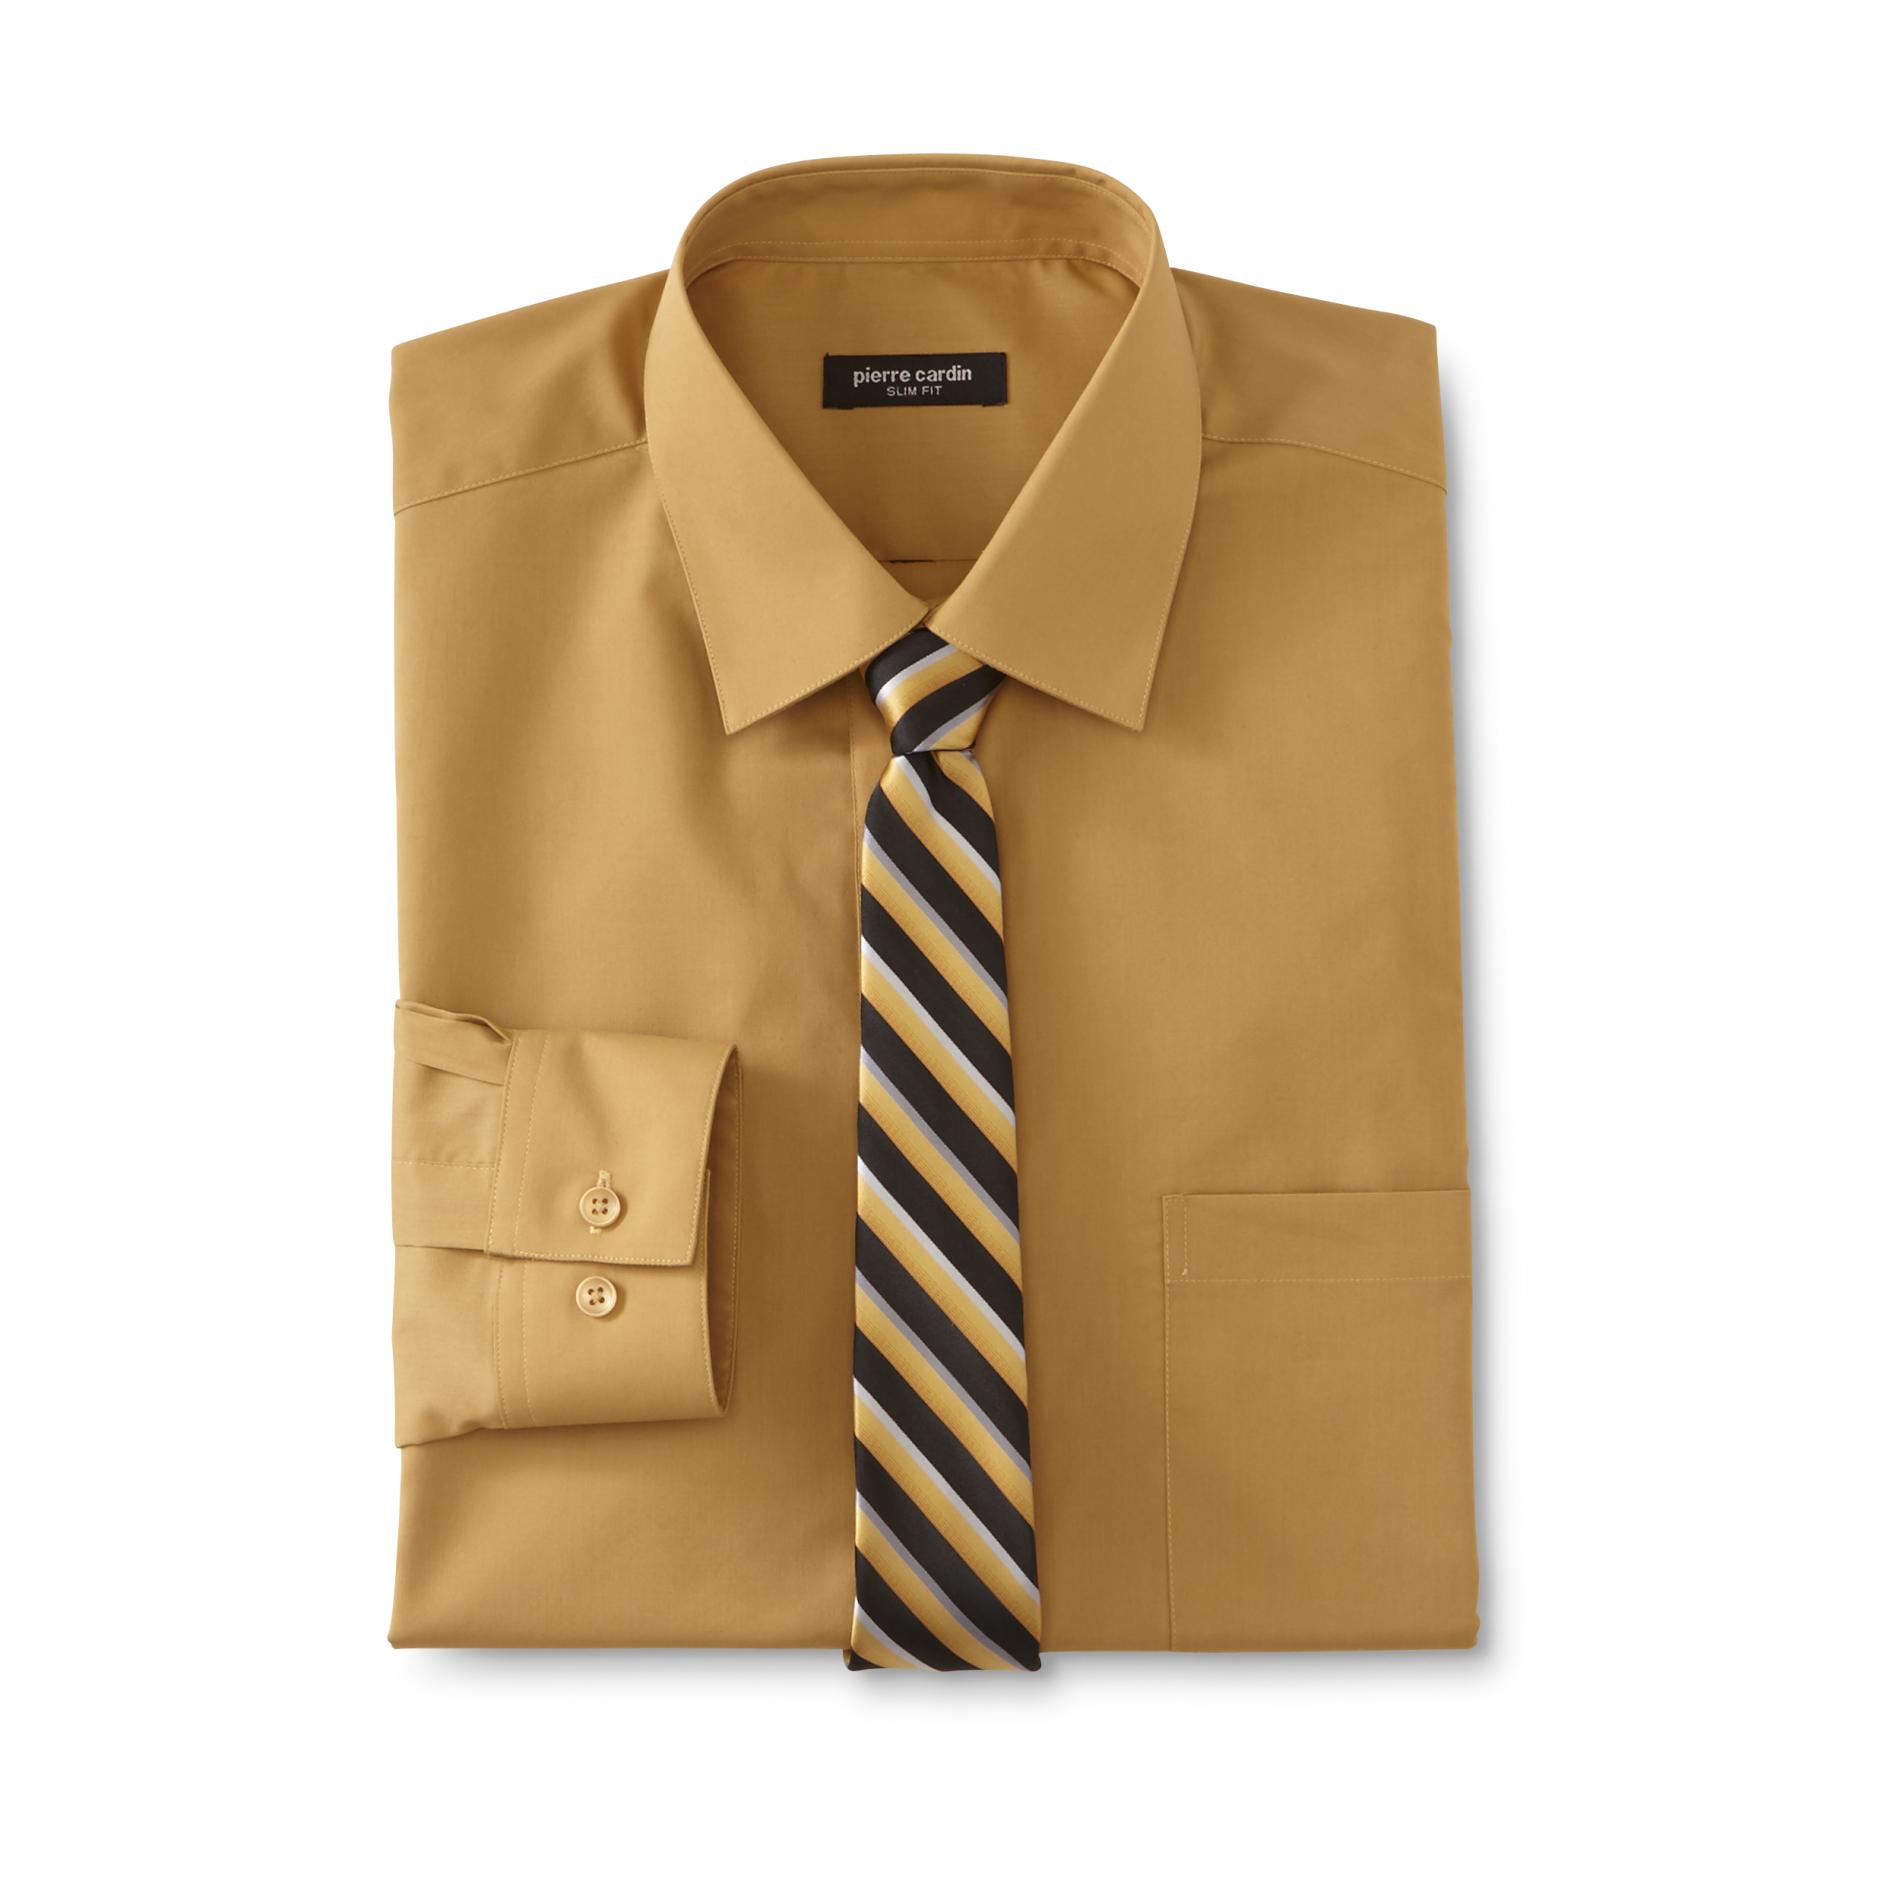 Pierre Cardin Men's Dress Shirt & Necktie - Striped